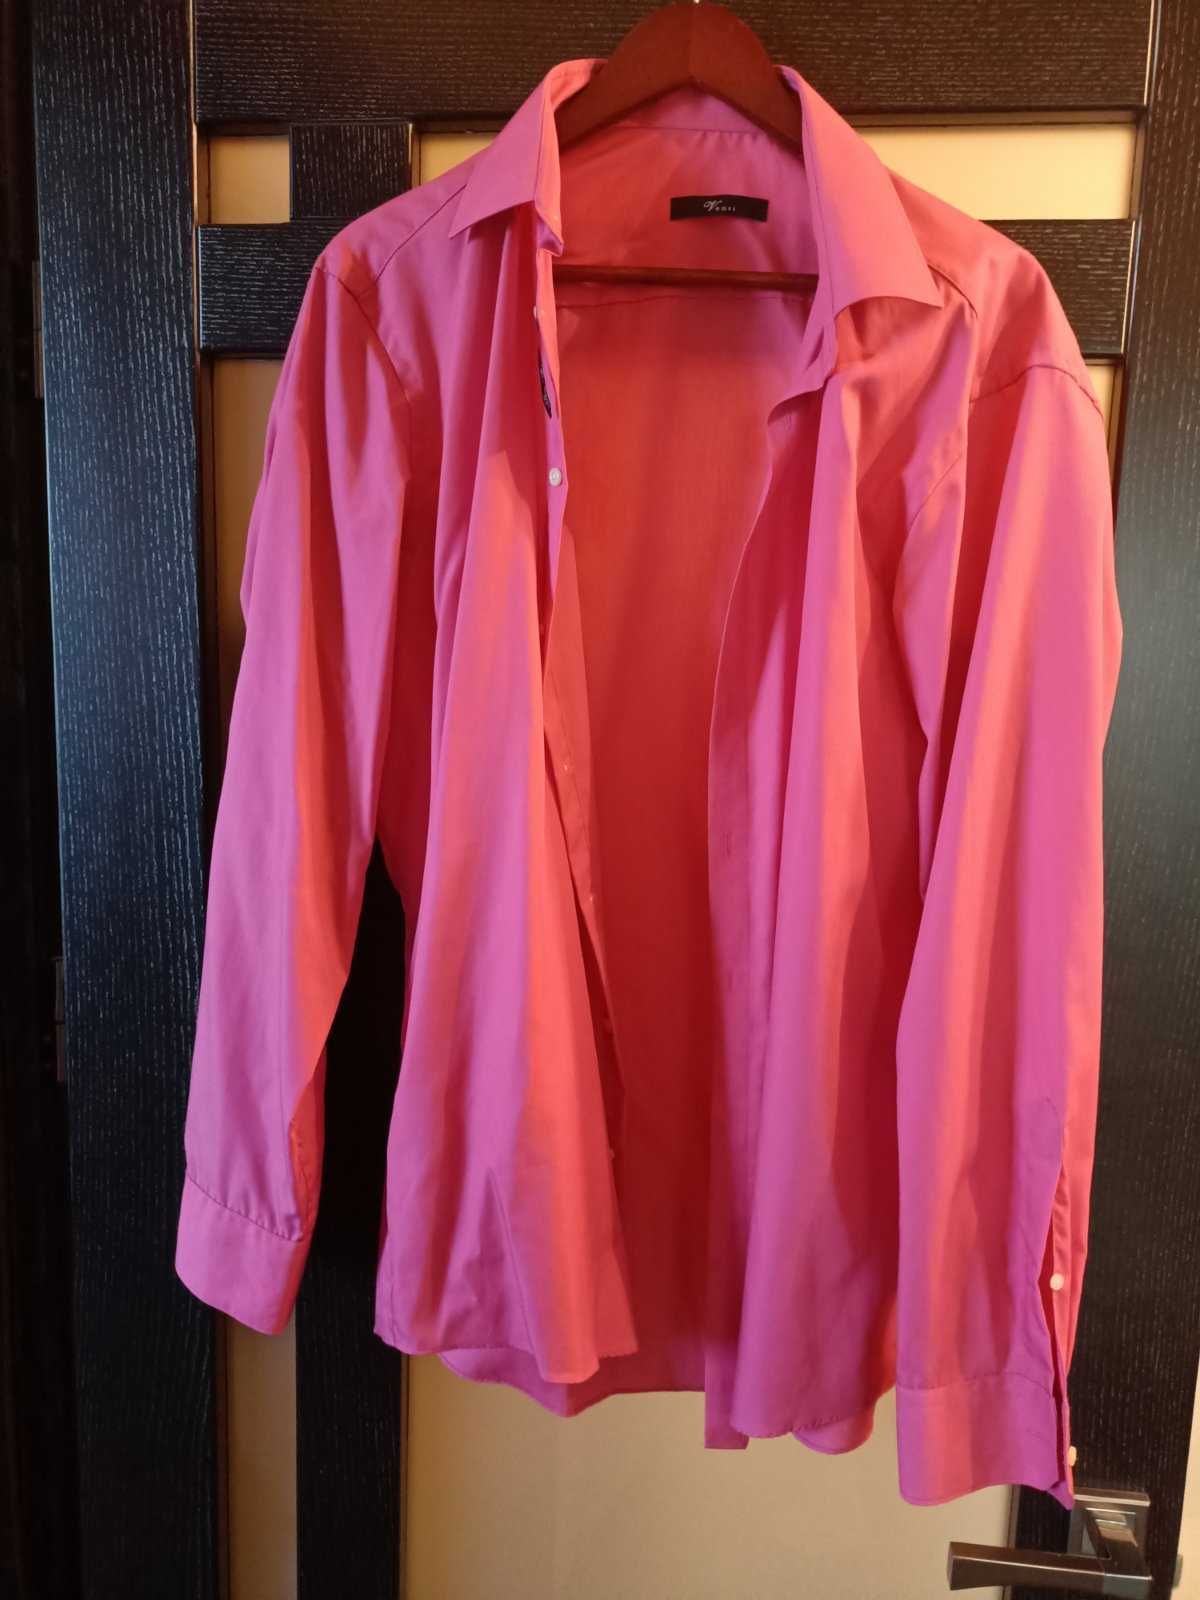 Новая мужская стильная рубашка Venti, розового цвета размер XL